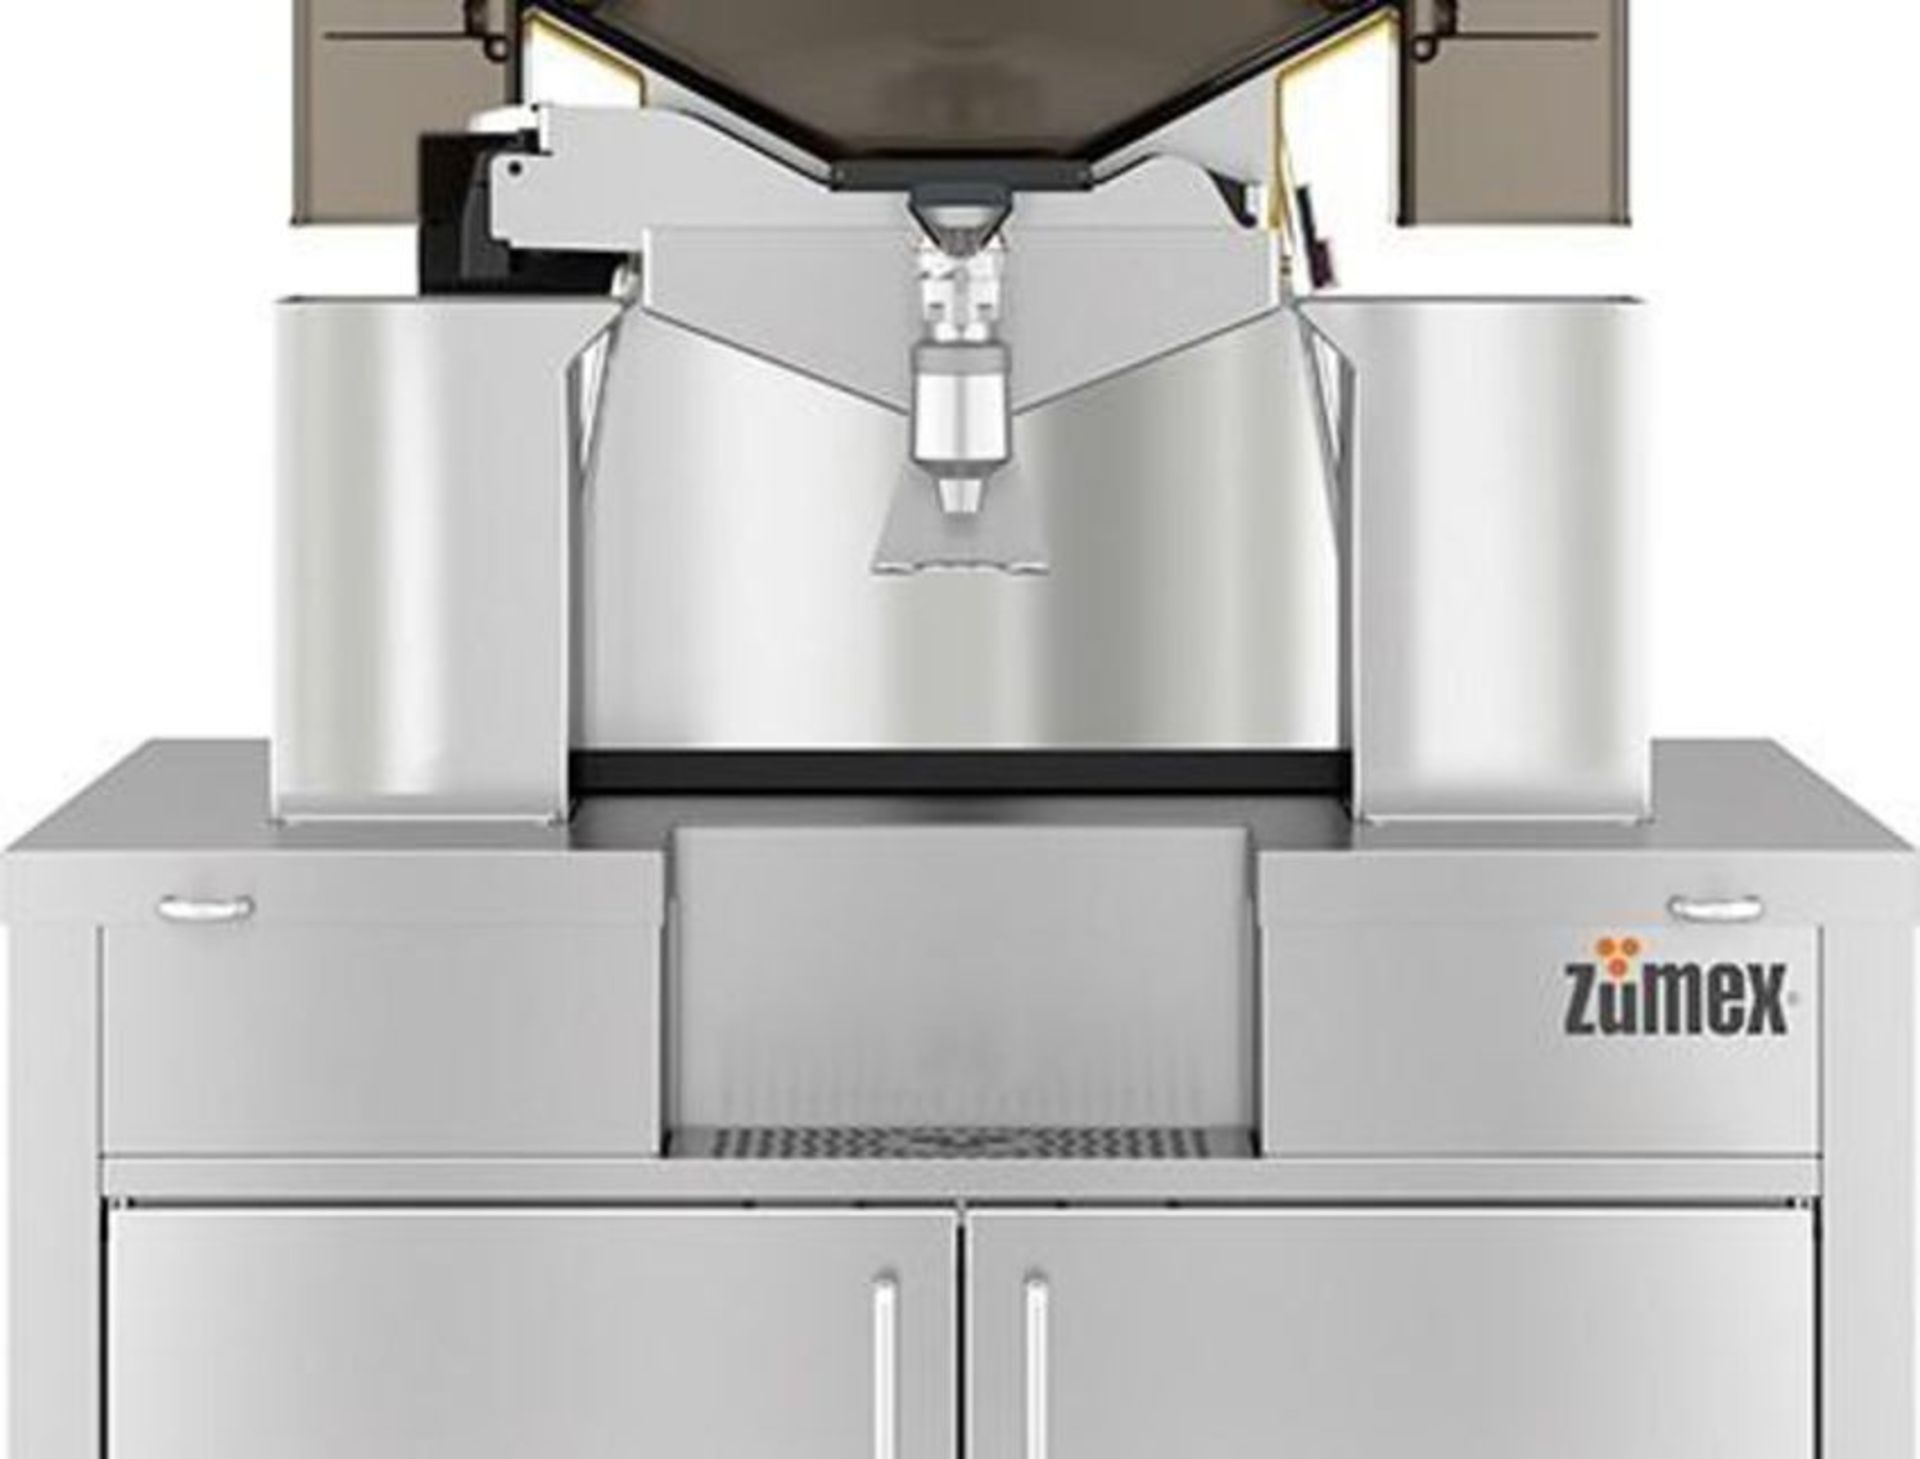 1 x Zumex Speed S +Plus Self-Service Podium Commercial Citrus Juicer - Manufactured in 2018 - Image 6 of 14